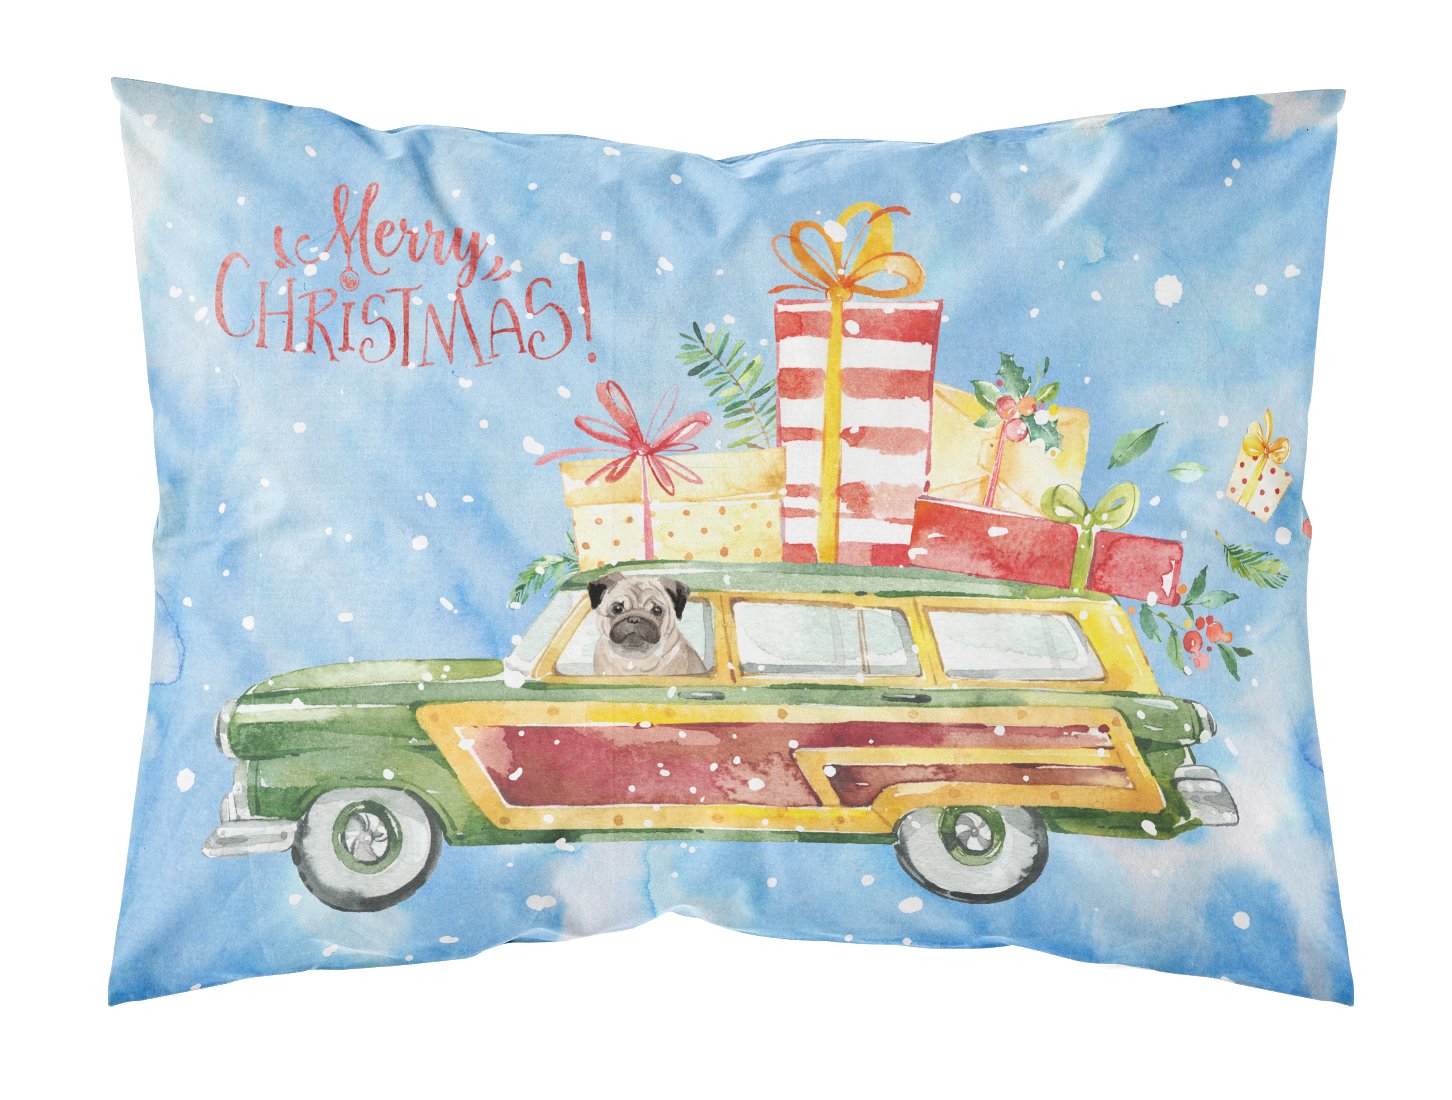 Merry Christmas Pug Fabric Standard Pillowcase CK2463PILLOWCASE by Caroline's Treasures